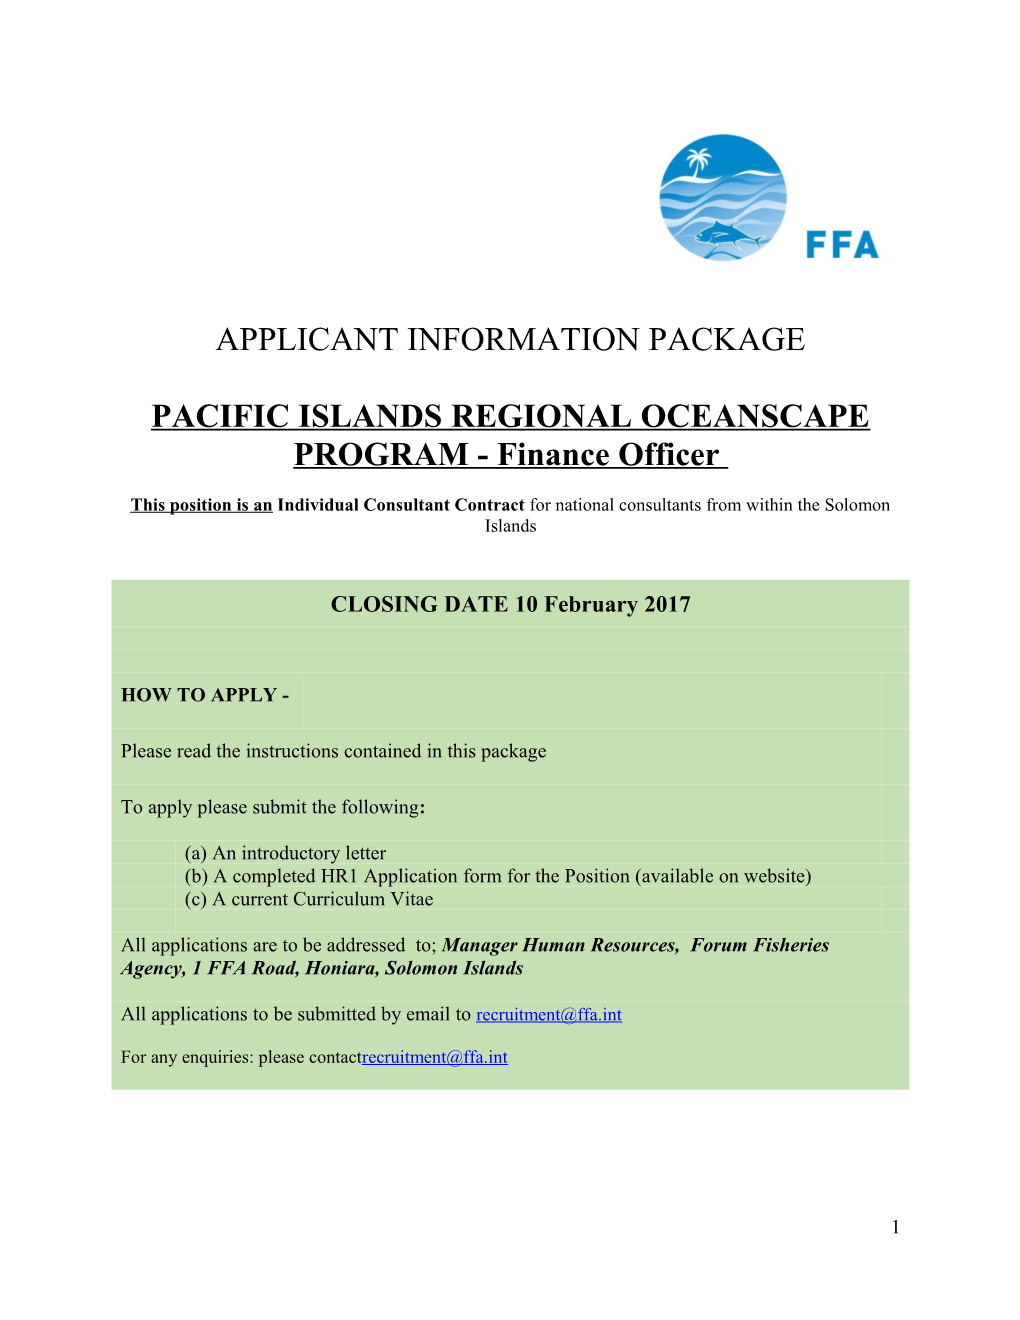 PACIFIC ISLANDS REGIONAL OCEANSCAPE PROGRAM - Finance Officer